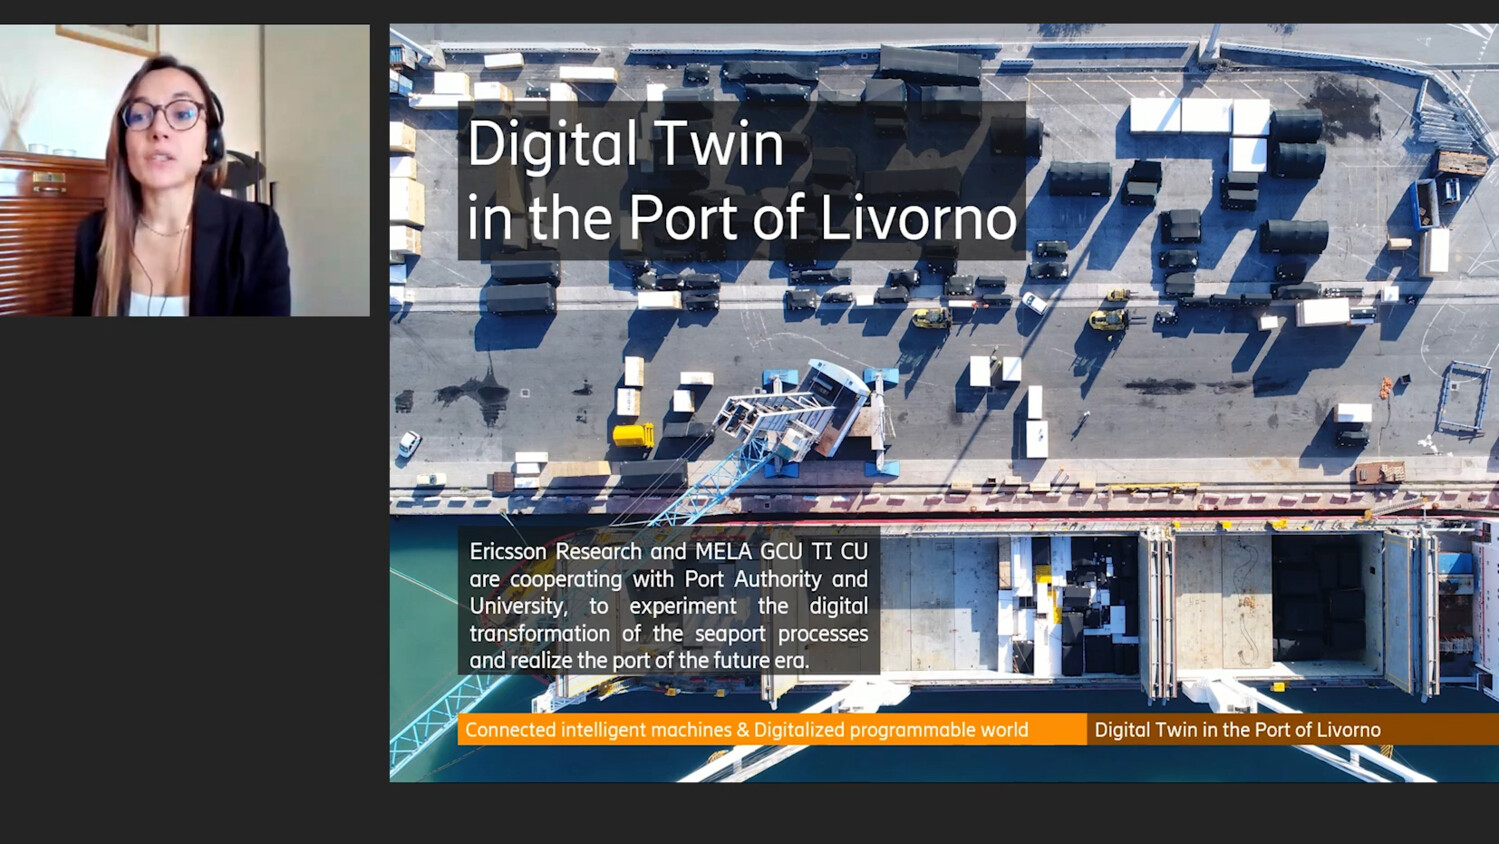 Digital twin